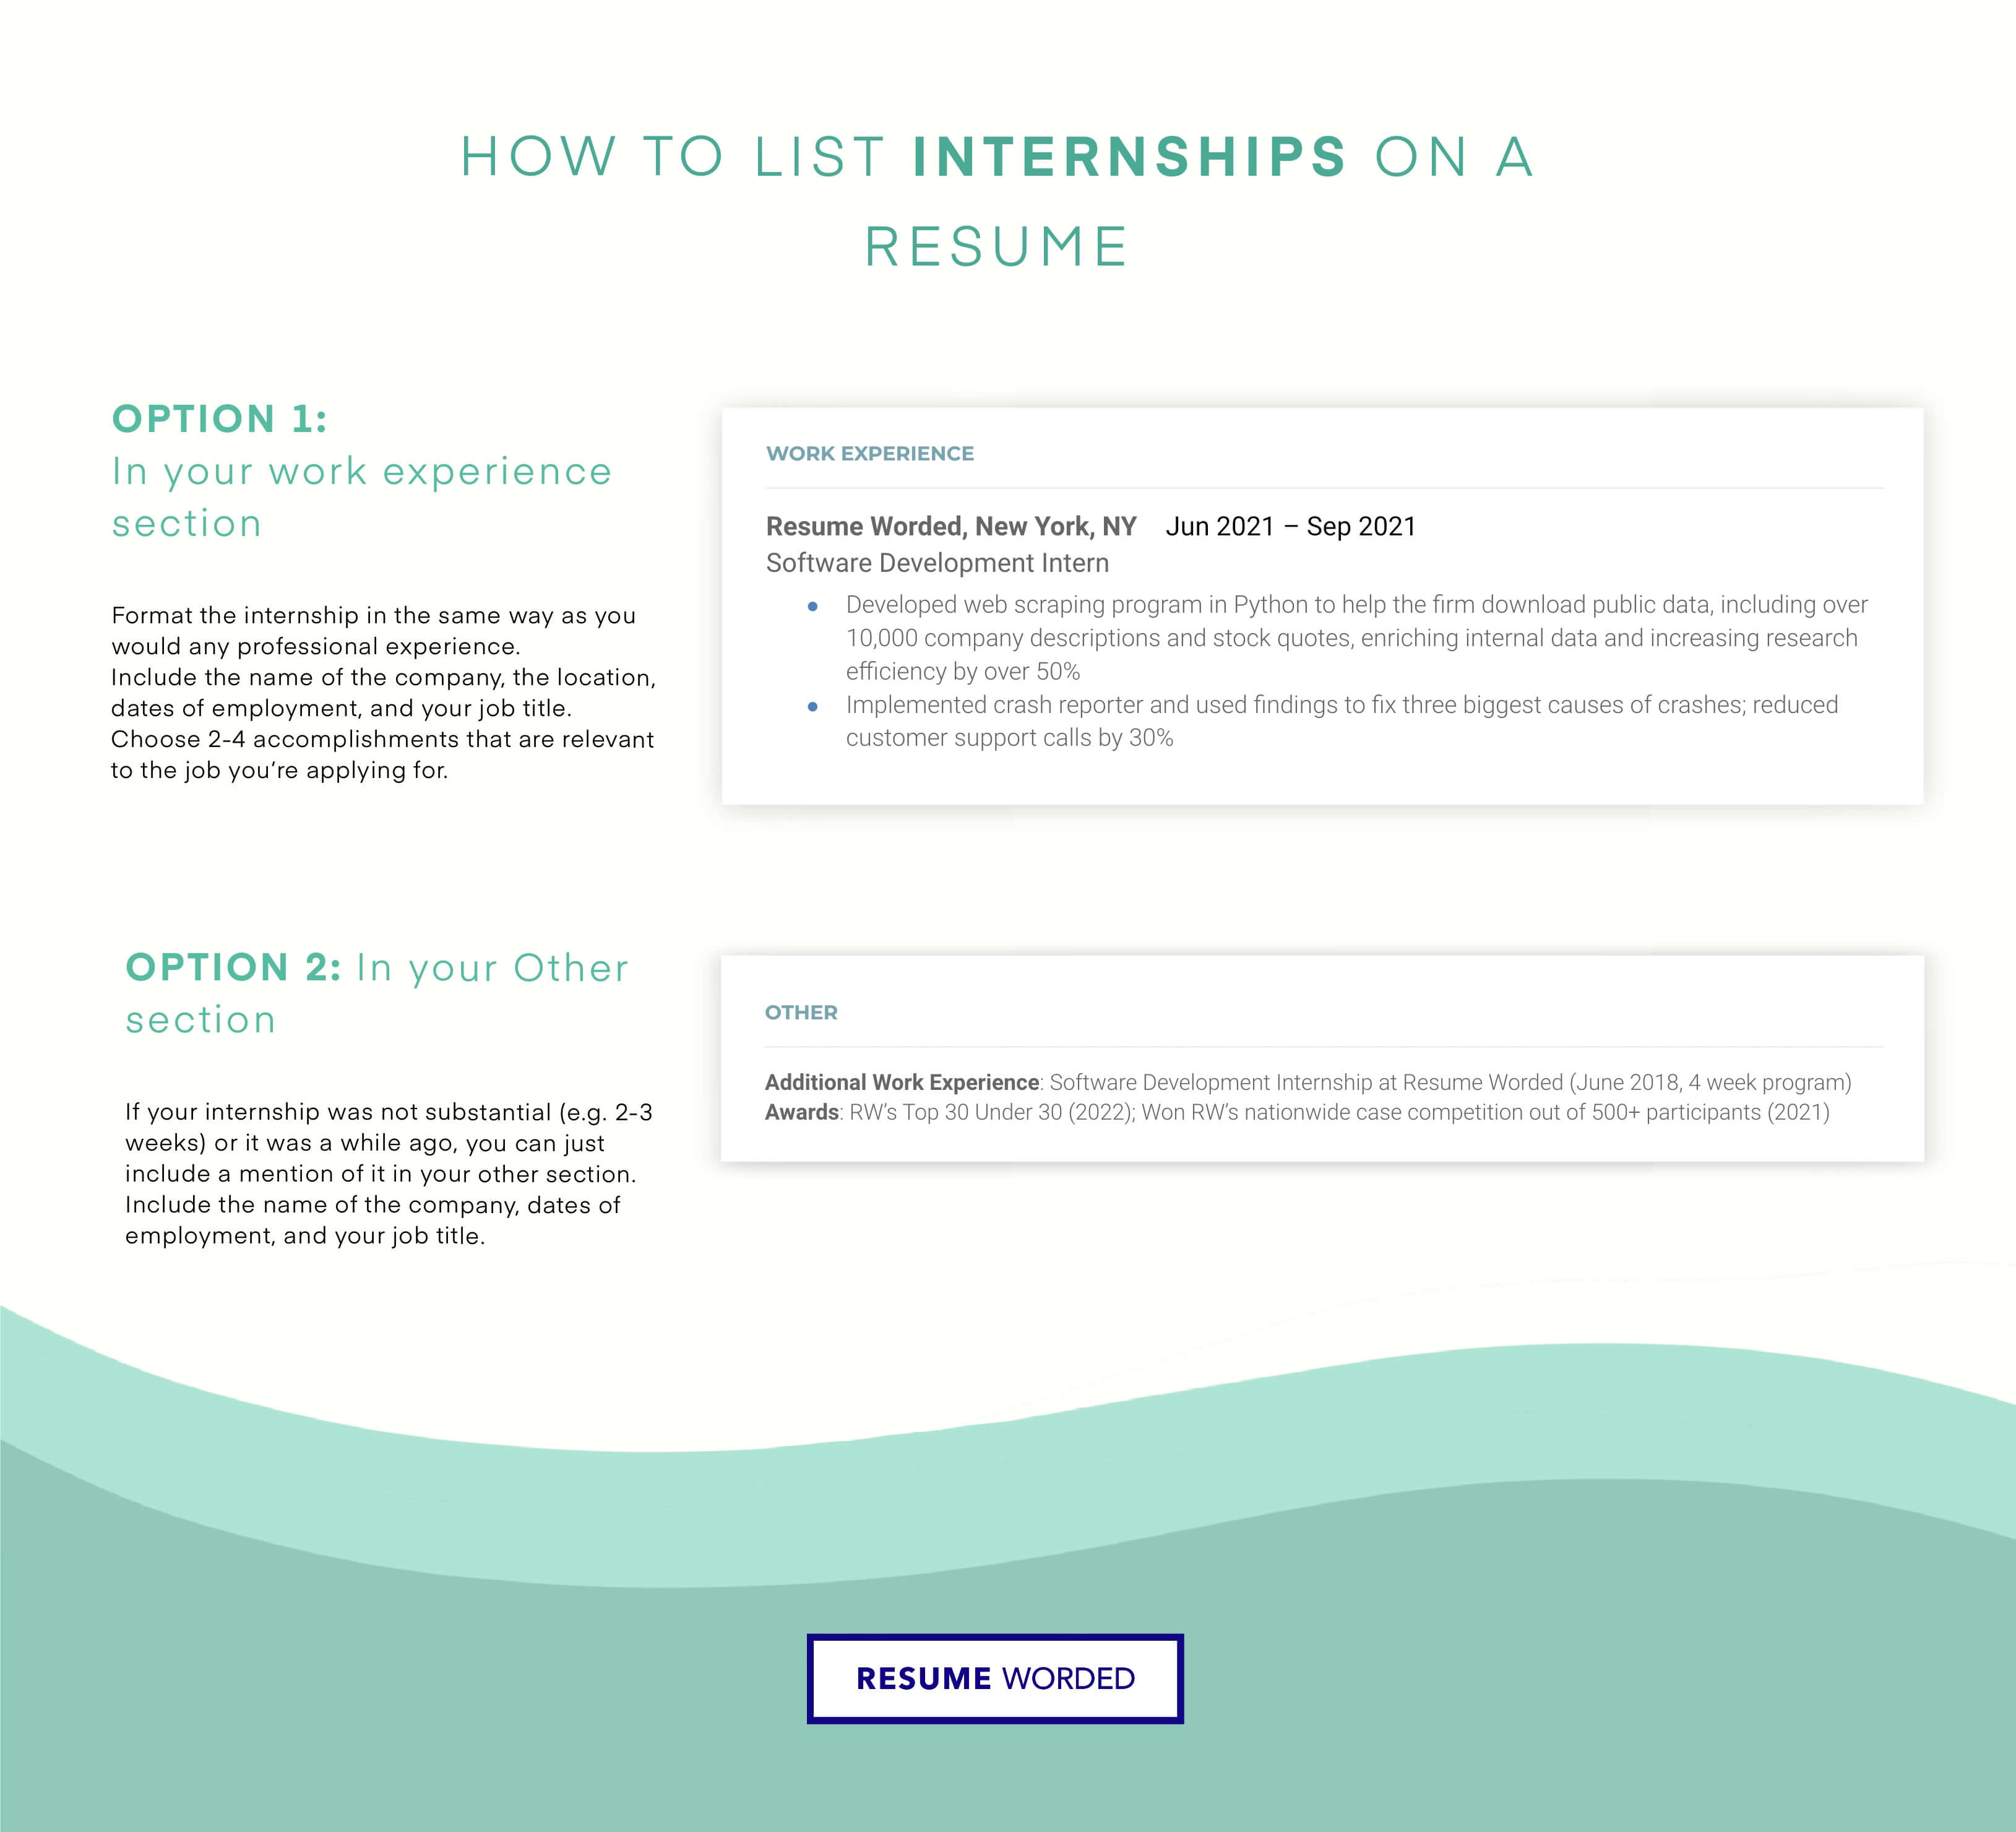 Quantify college or internship experience - Entry Level Financial Advisor CV